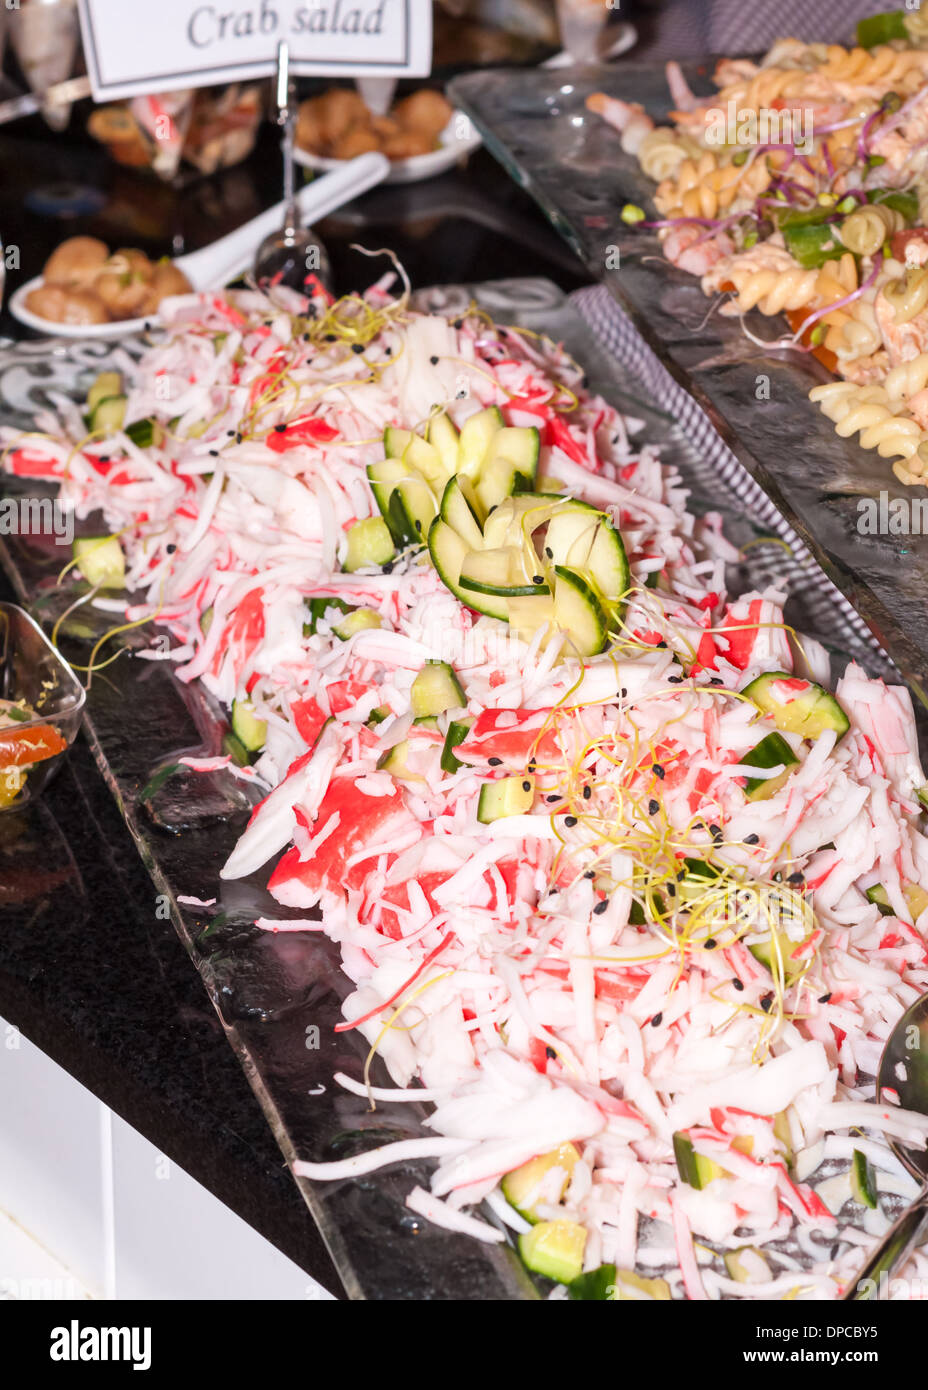 Surimi salad - Closeup Stock Photo